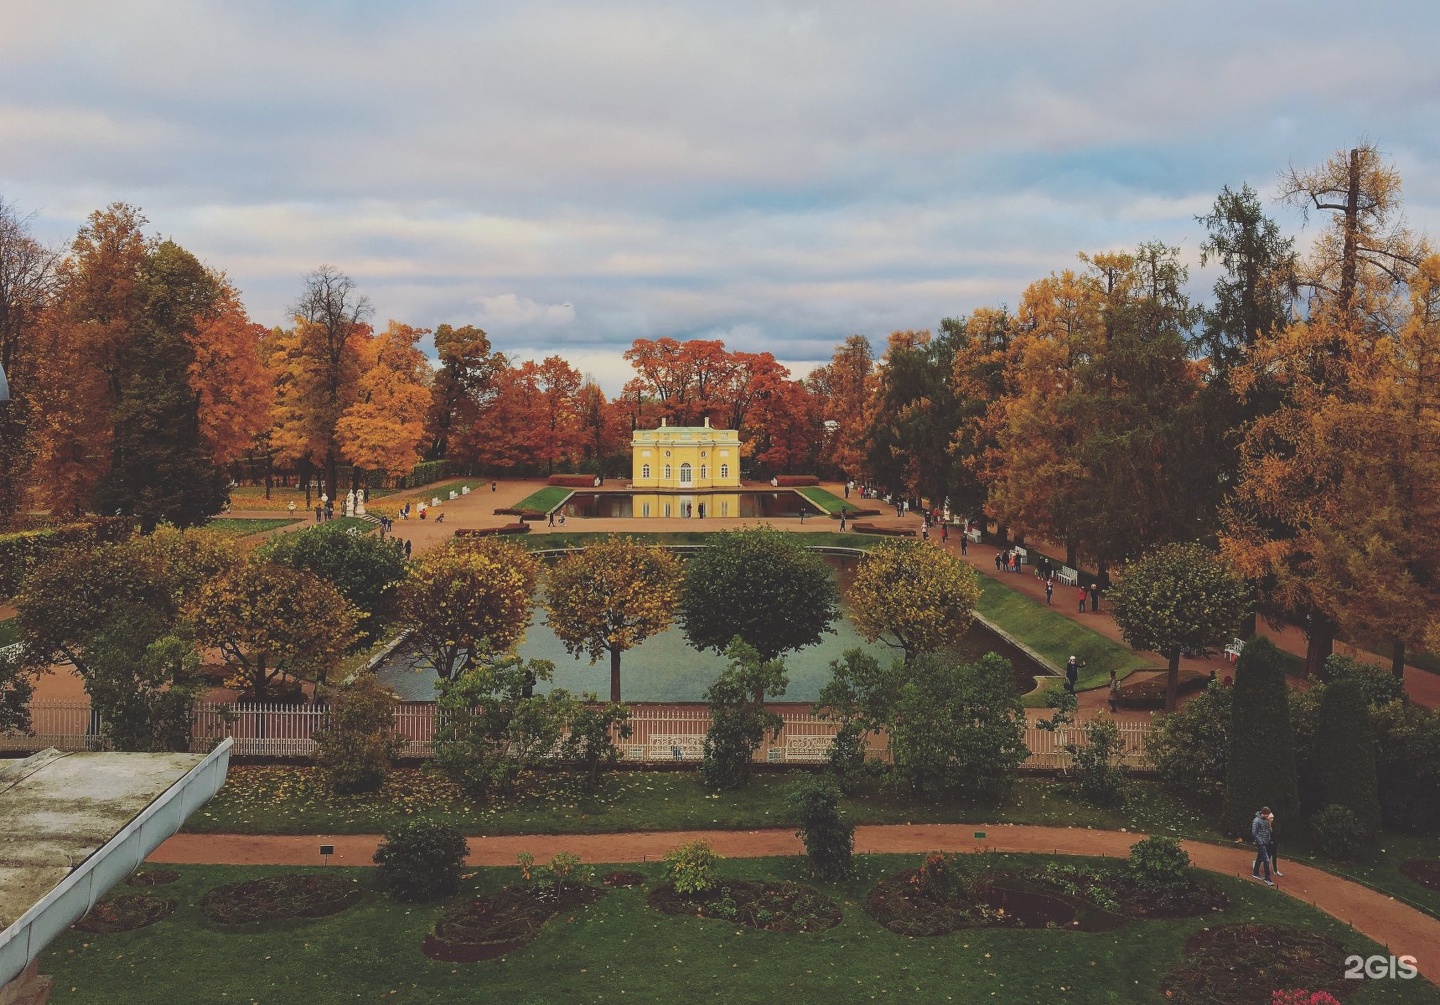 Голландский сад Екатерининский парк Санкт Петербург